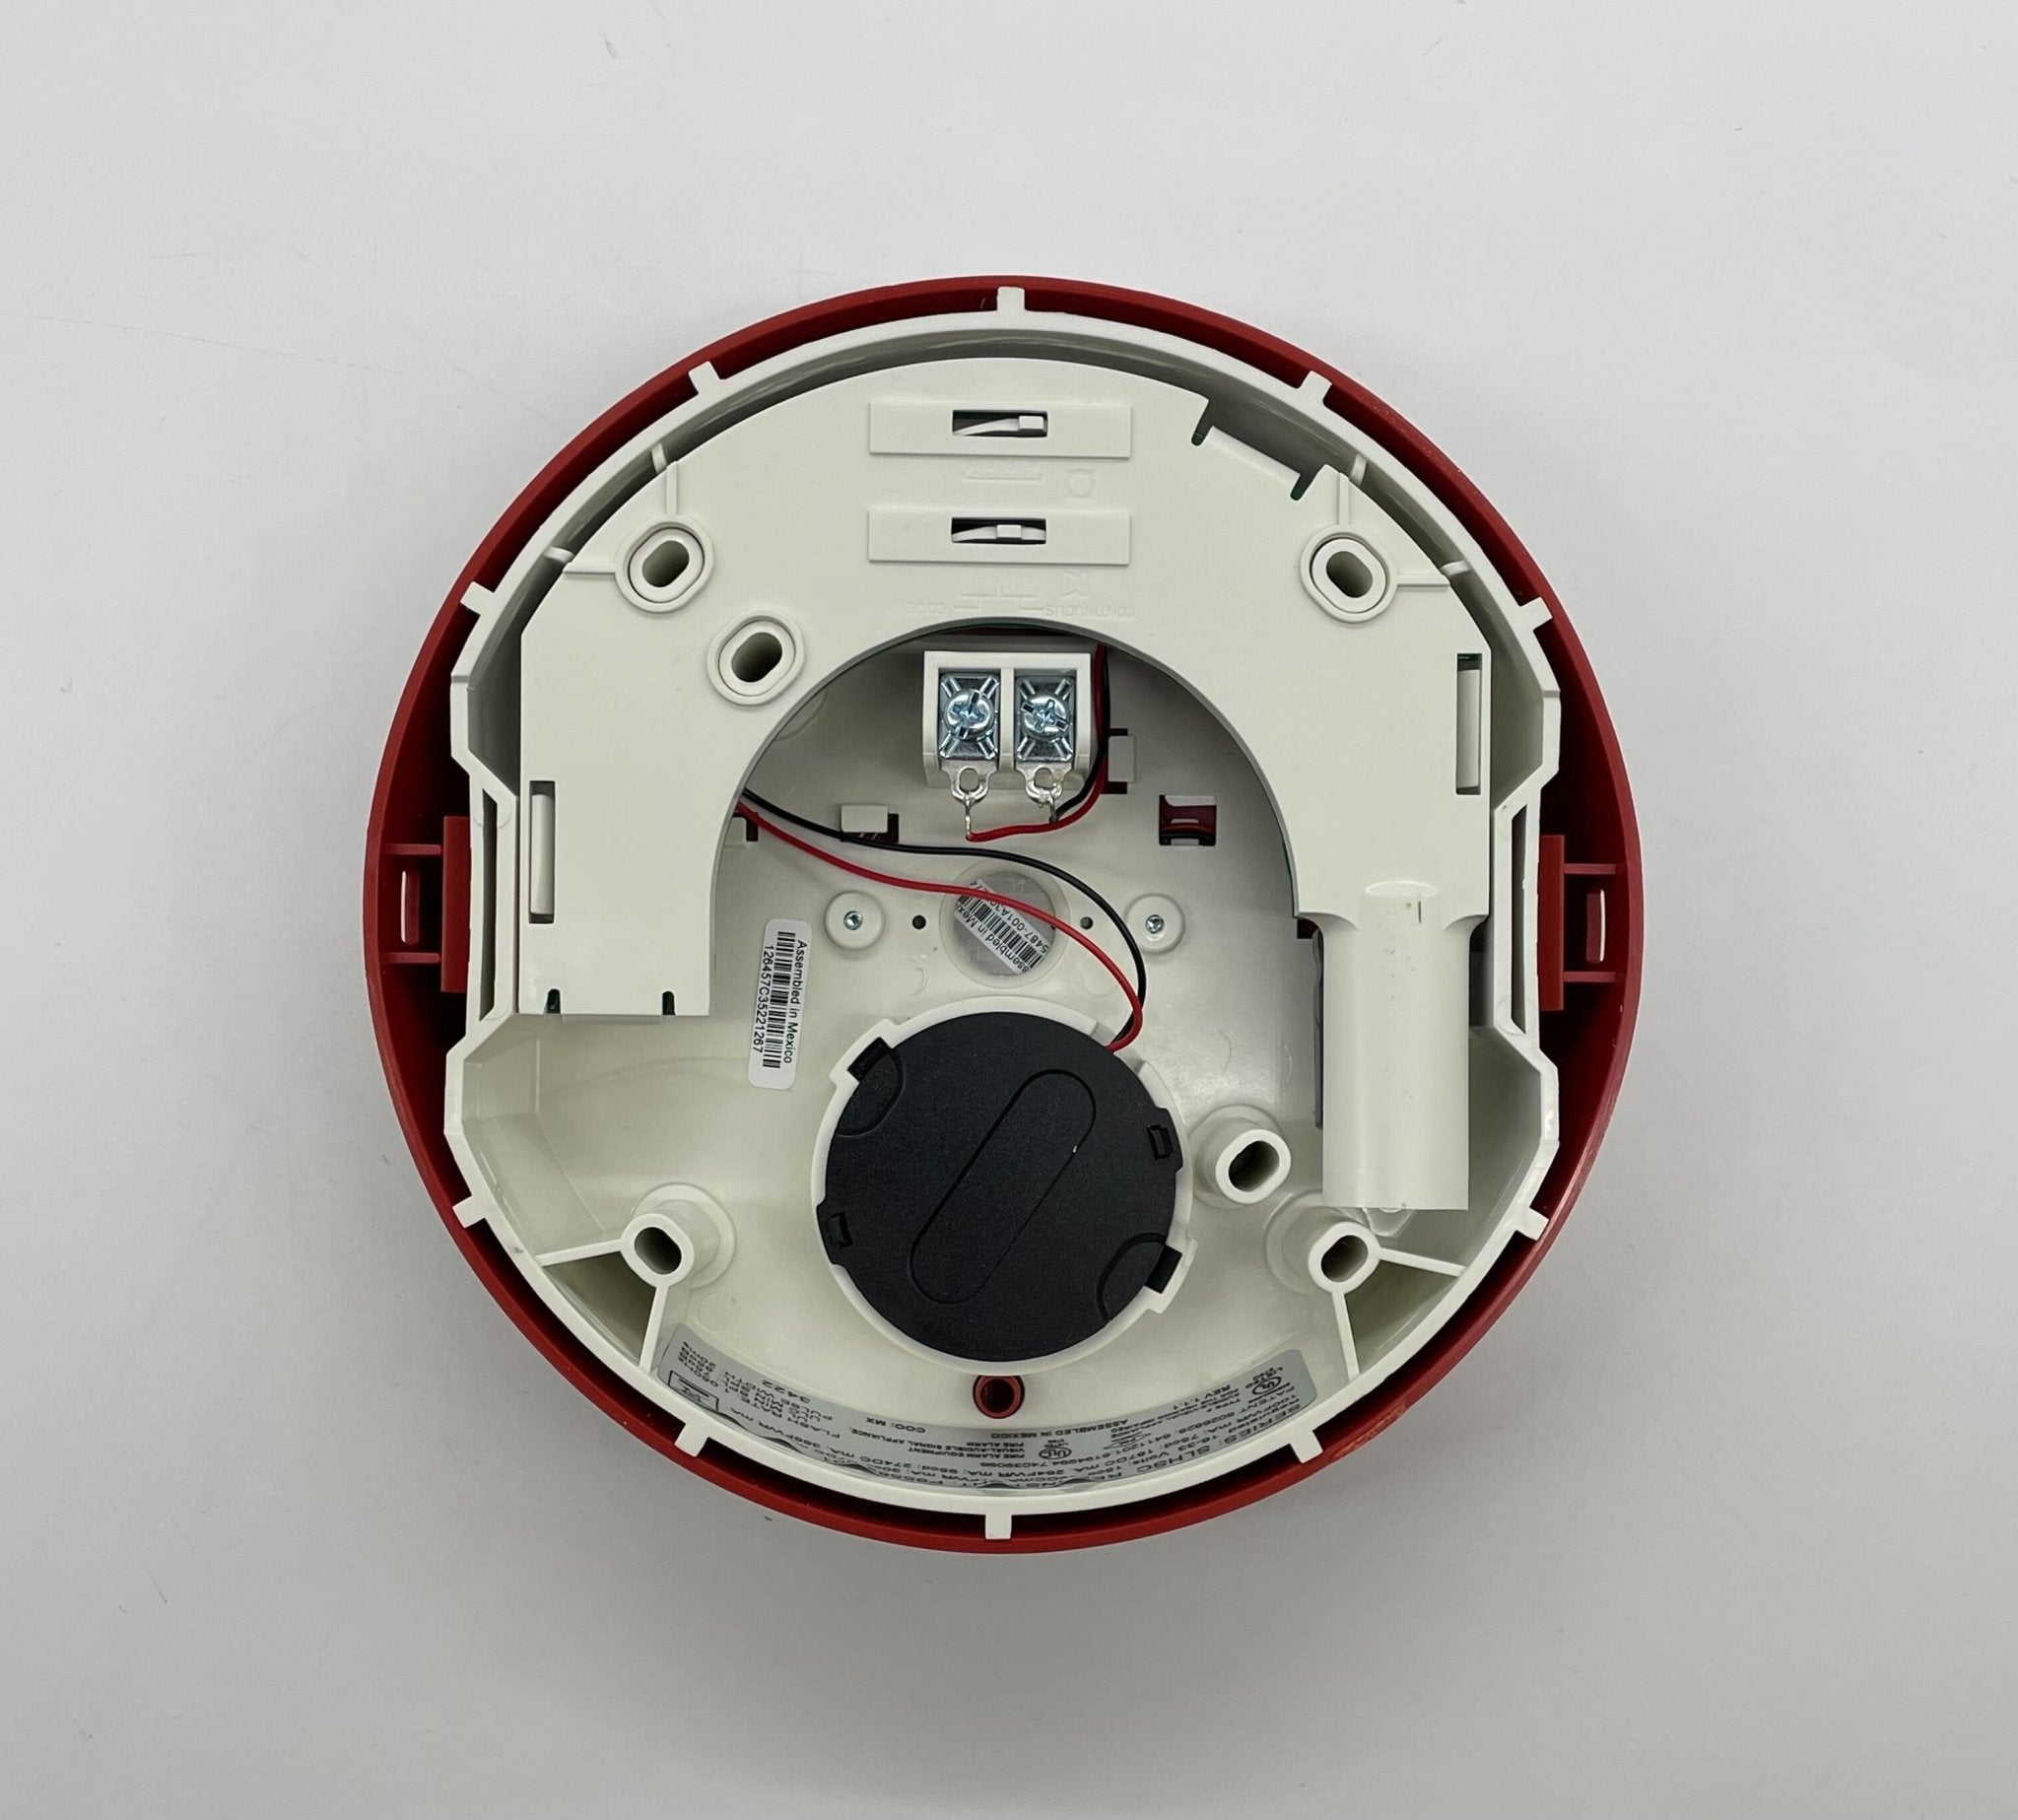 Siemens SLHSCR-F - The Fire Alarm Supplier